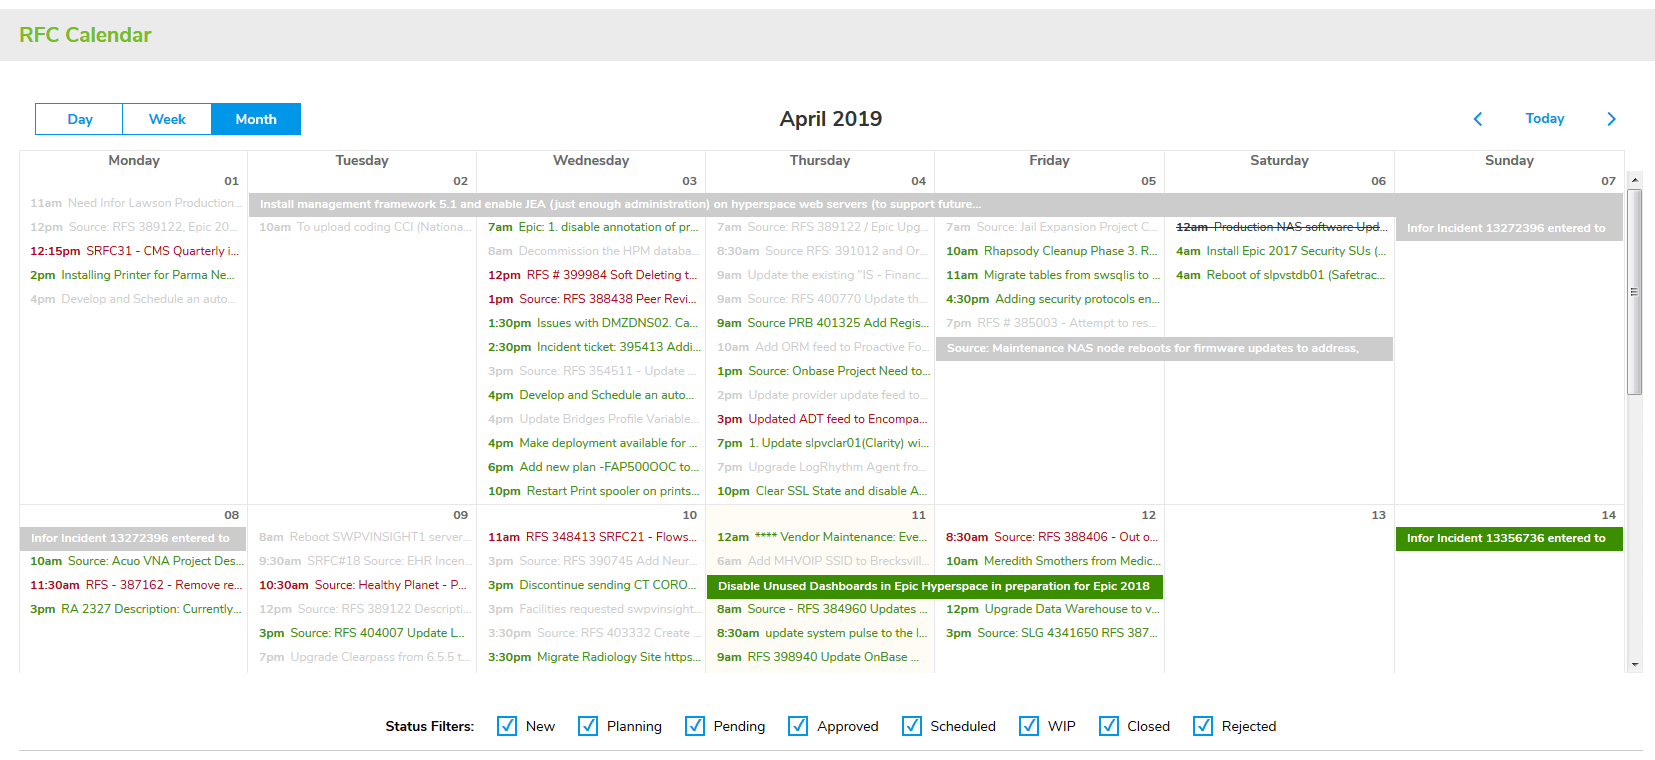 Change Management RFC Interactive Calendar